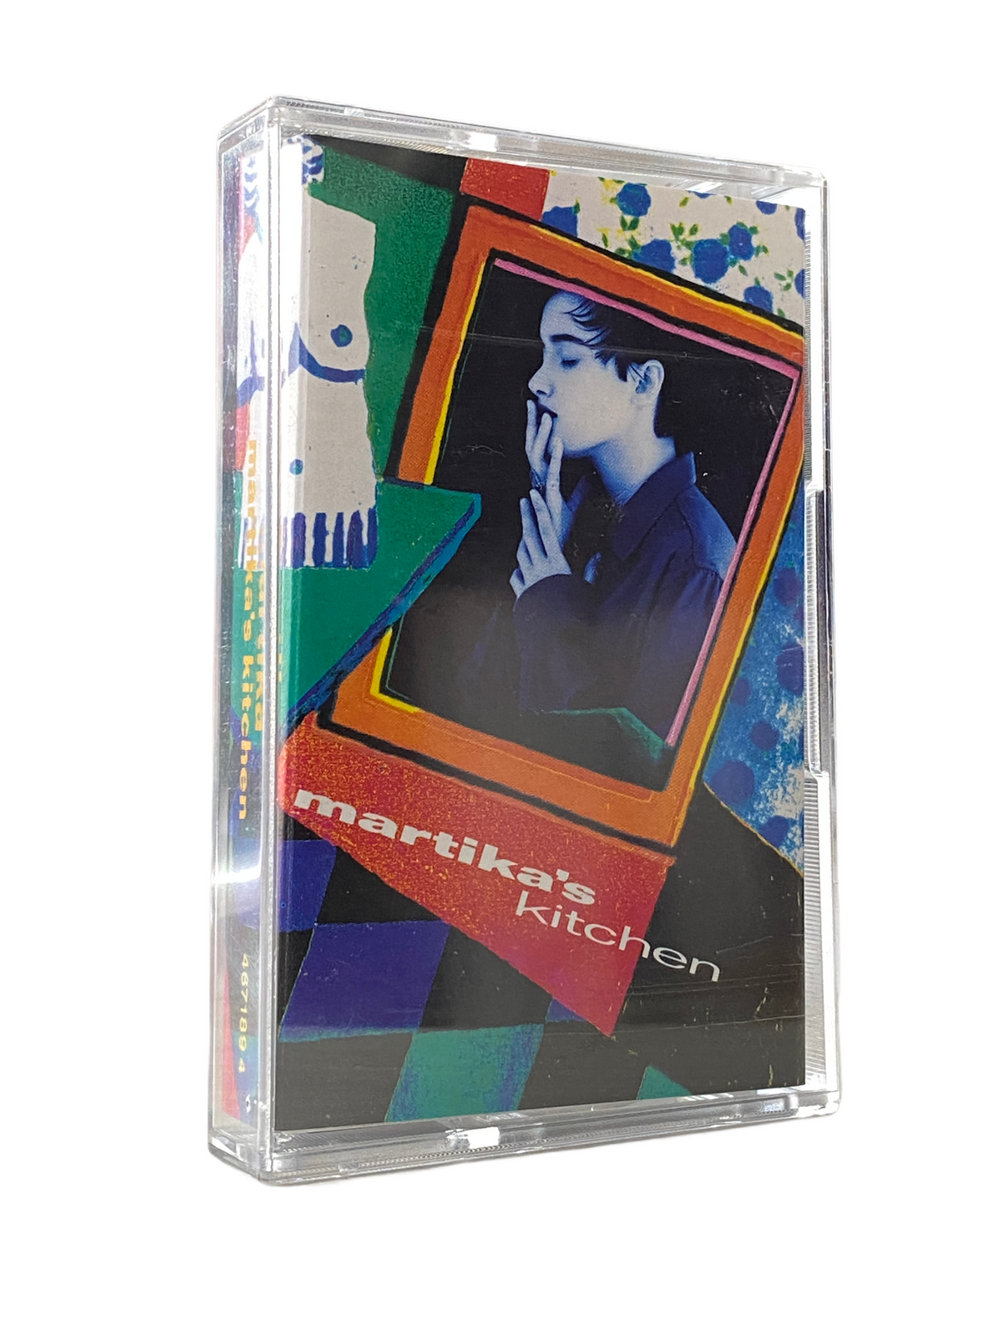 Prince – Martika Martika's Kitchen Original Cassette Tape UK EU 1991 Release Prince